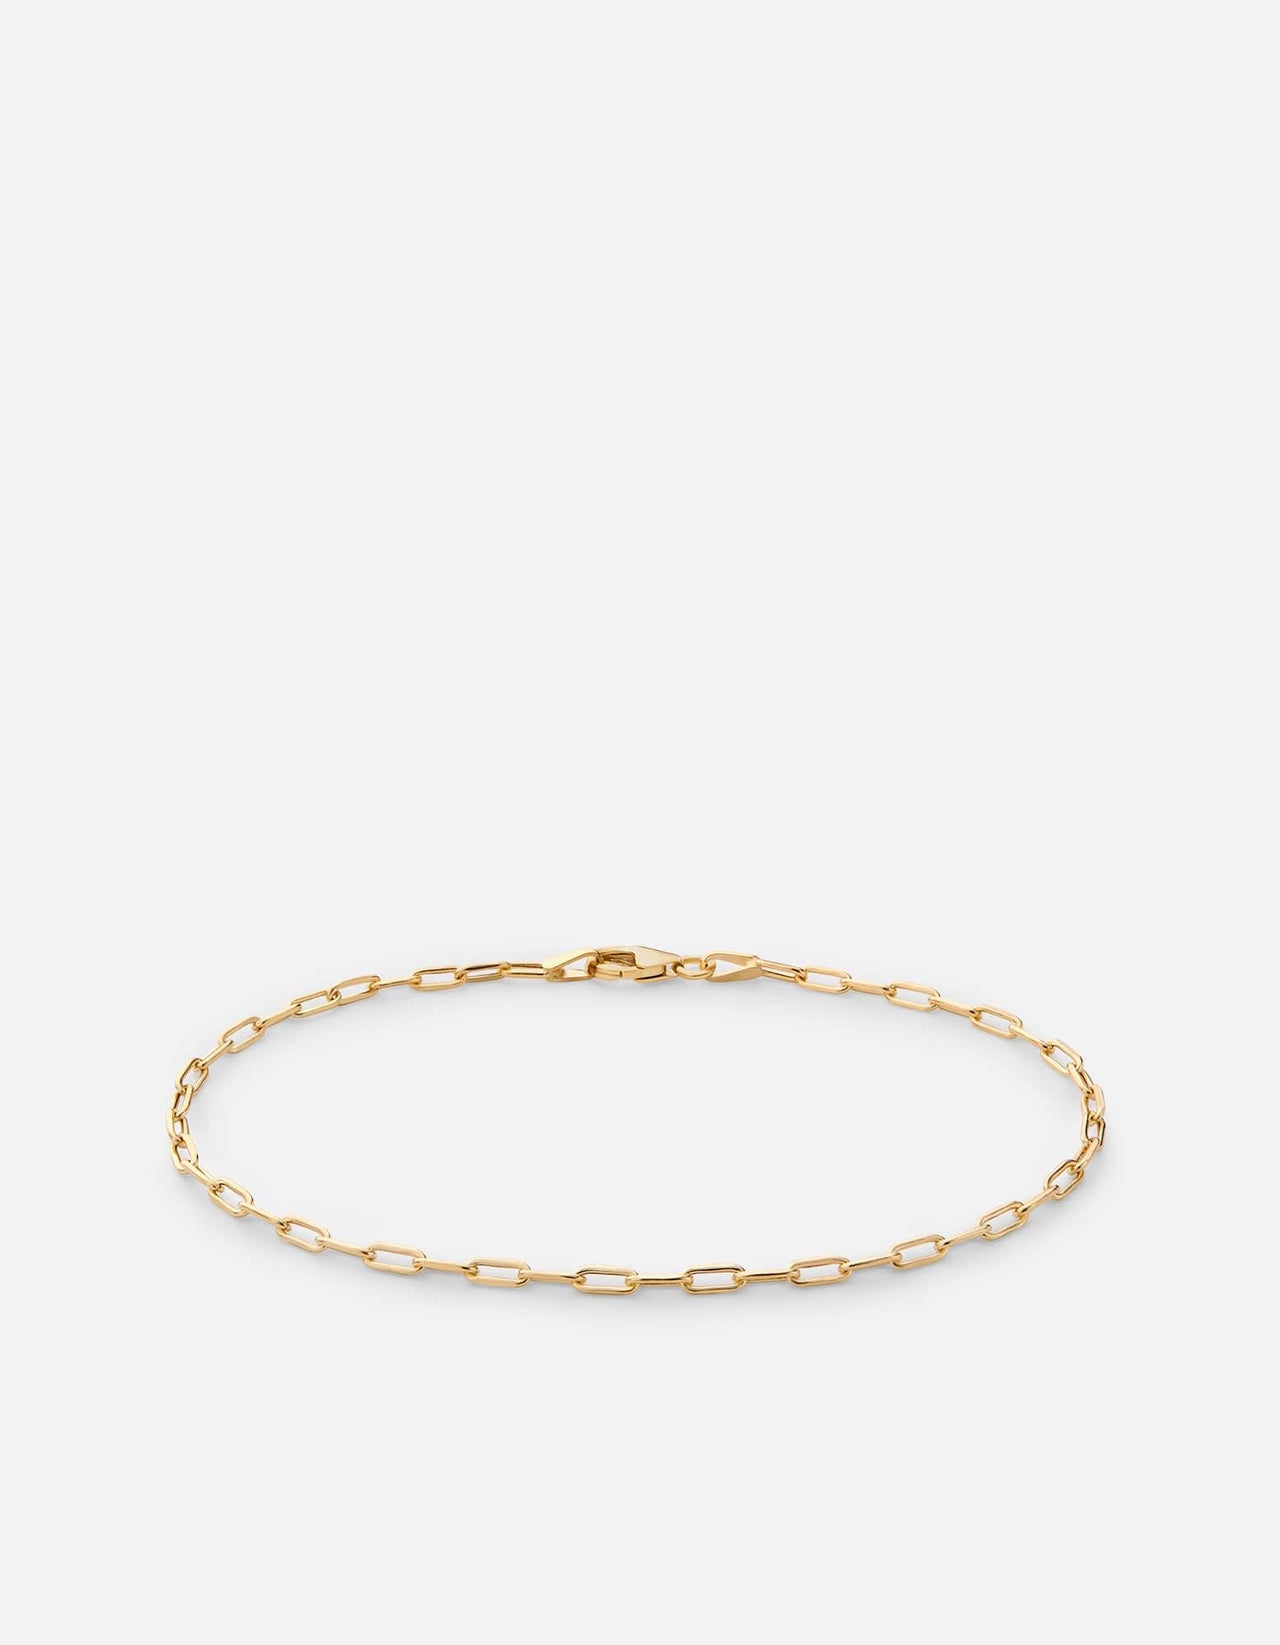 Buy SOHI Women Gold-Plated Link Bracelet Online